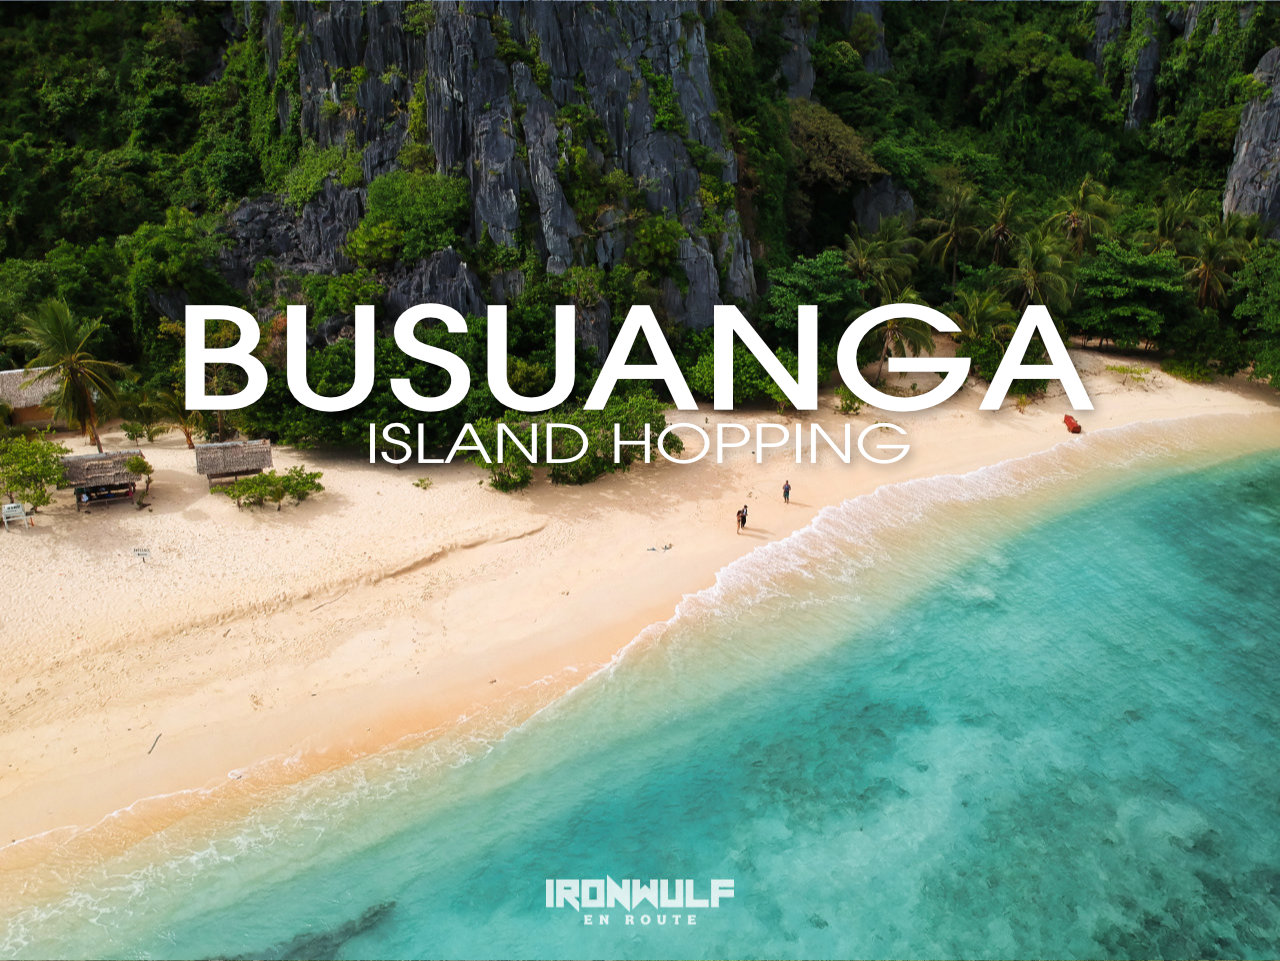 Malajon Island, part of the Busuanga Island Hopping